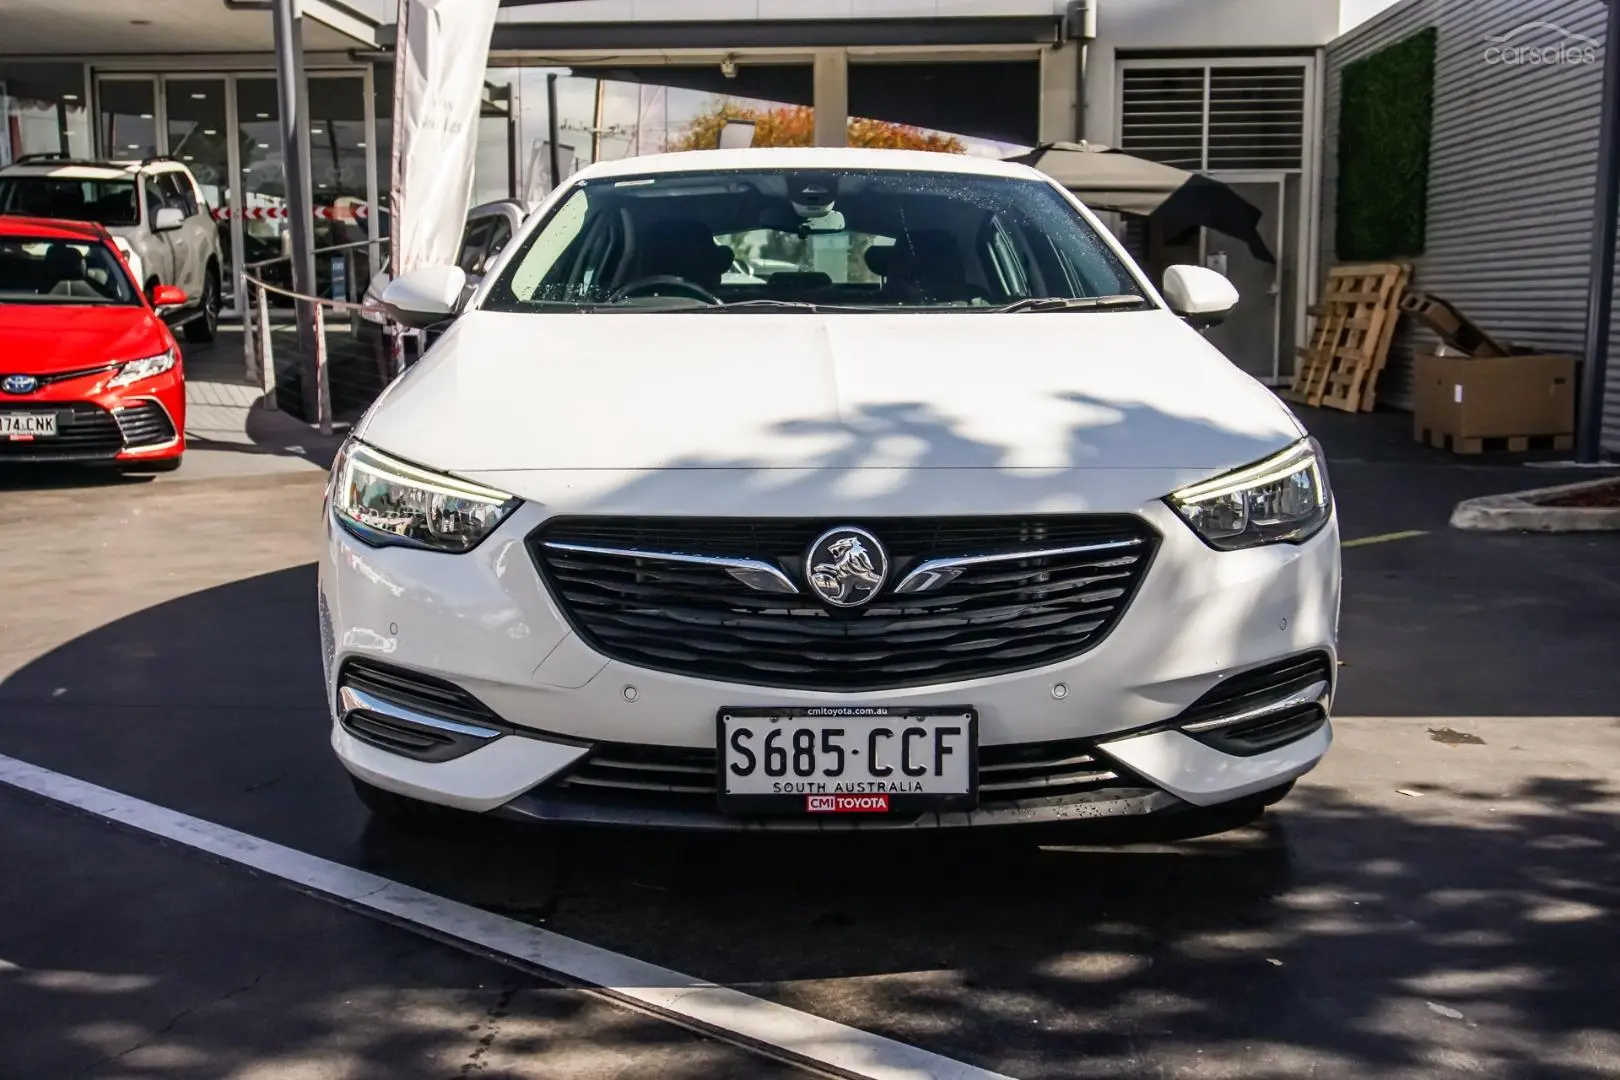 2019 Holden Commodore Image 4